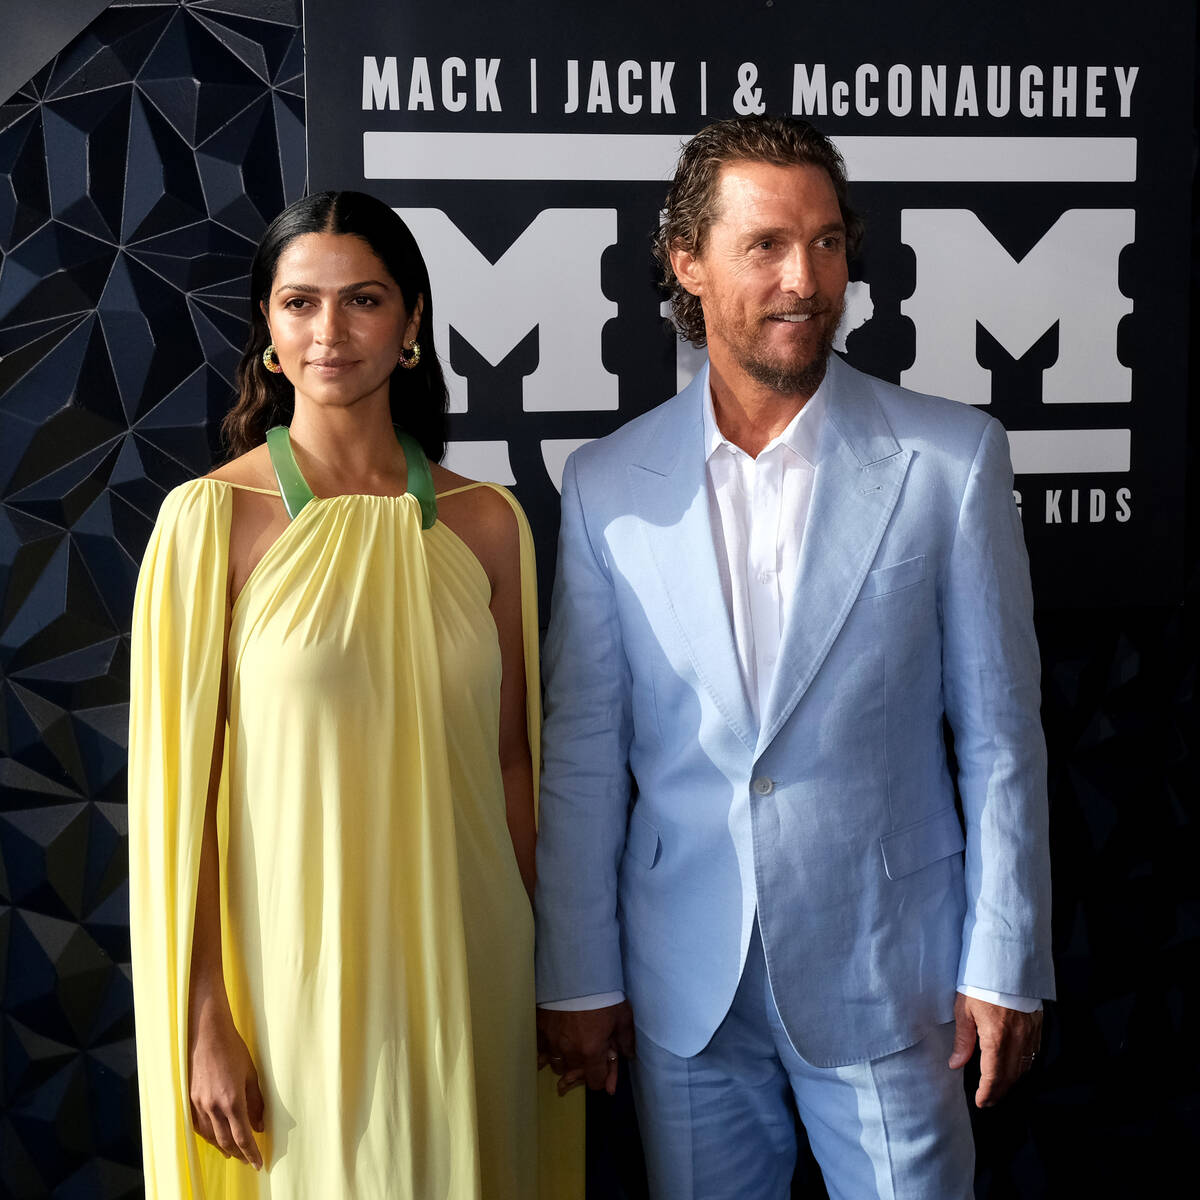 Camila Alves McConaughey and Matthew McConaughey attend the 2023 Mack, Jack & McConaughey Gala ...